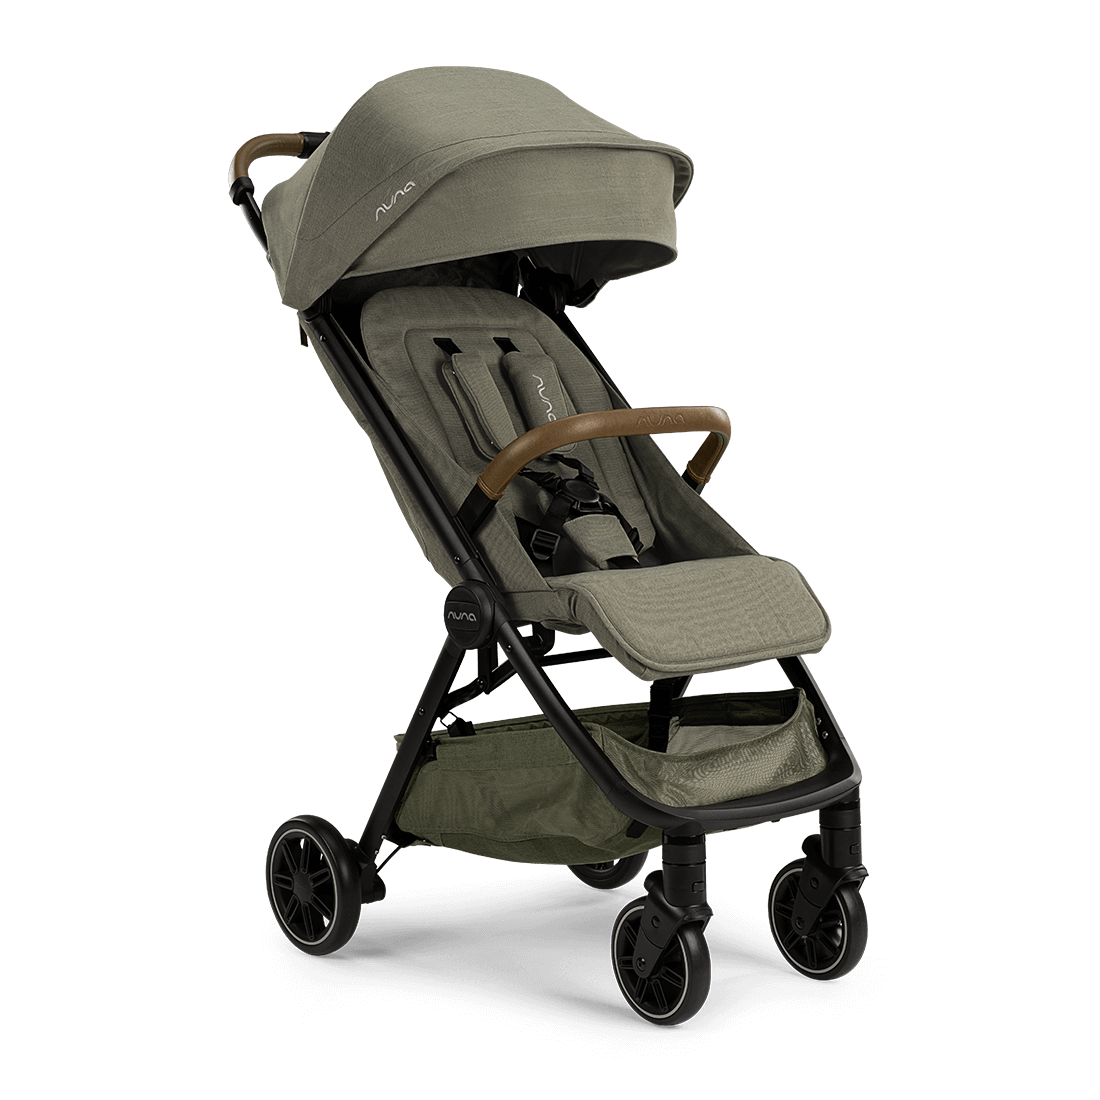 Nuna Baby Stroller TRVL New model-Bebehaus